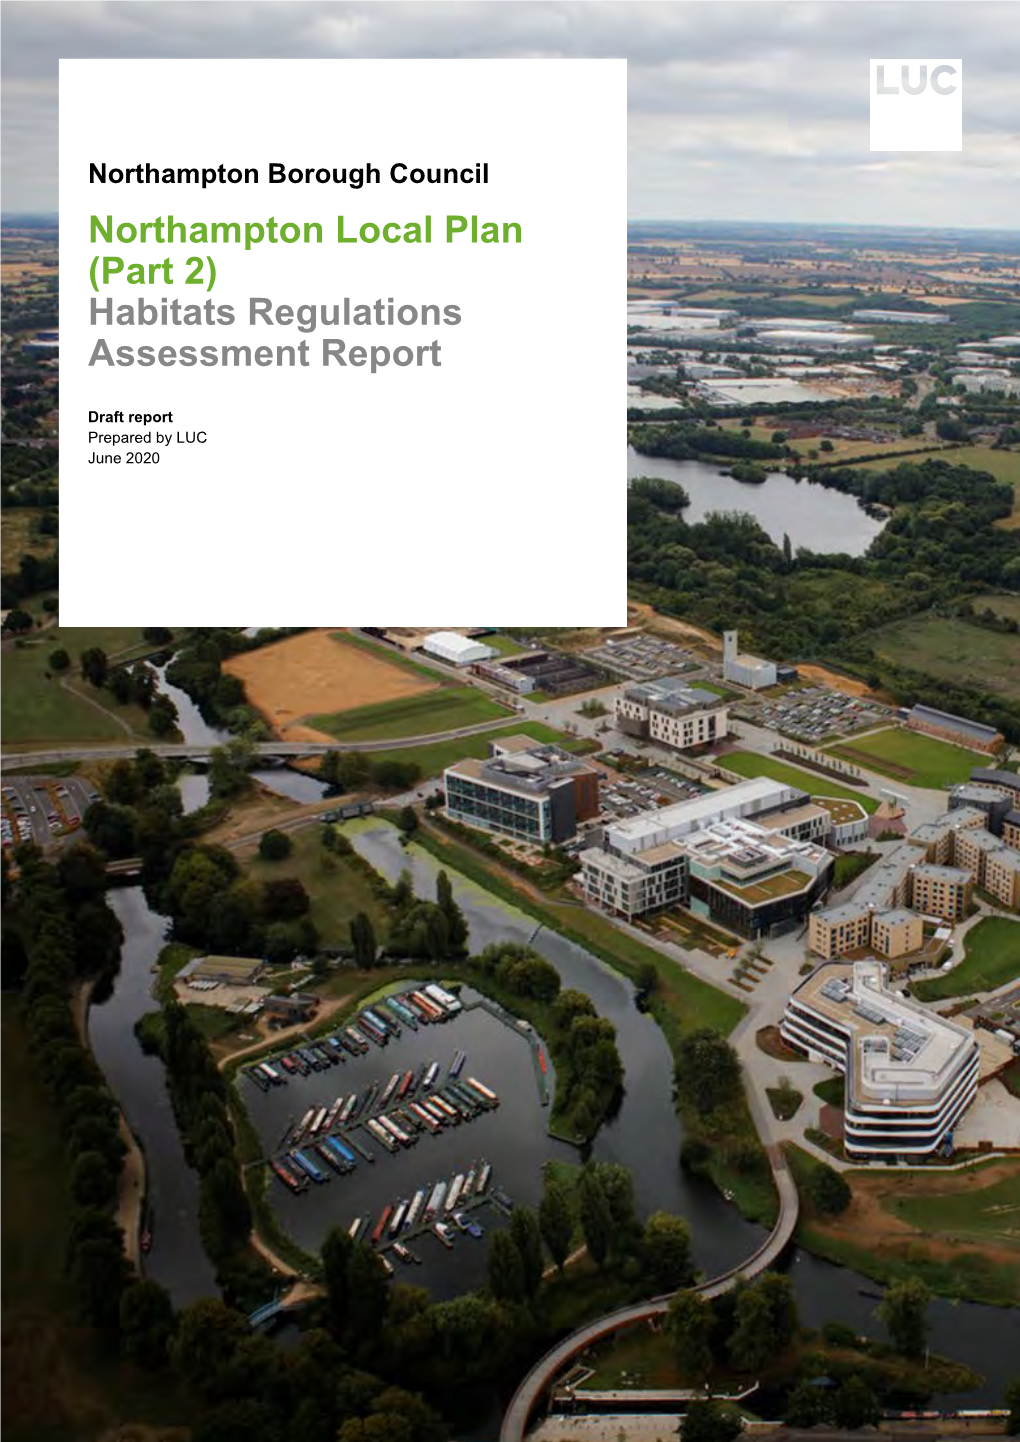 Northampton Local Plan (Part 2) Habitats Regulations Assessment Report